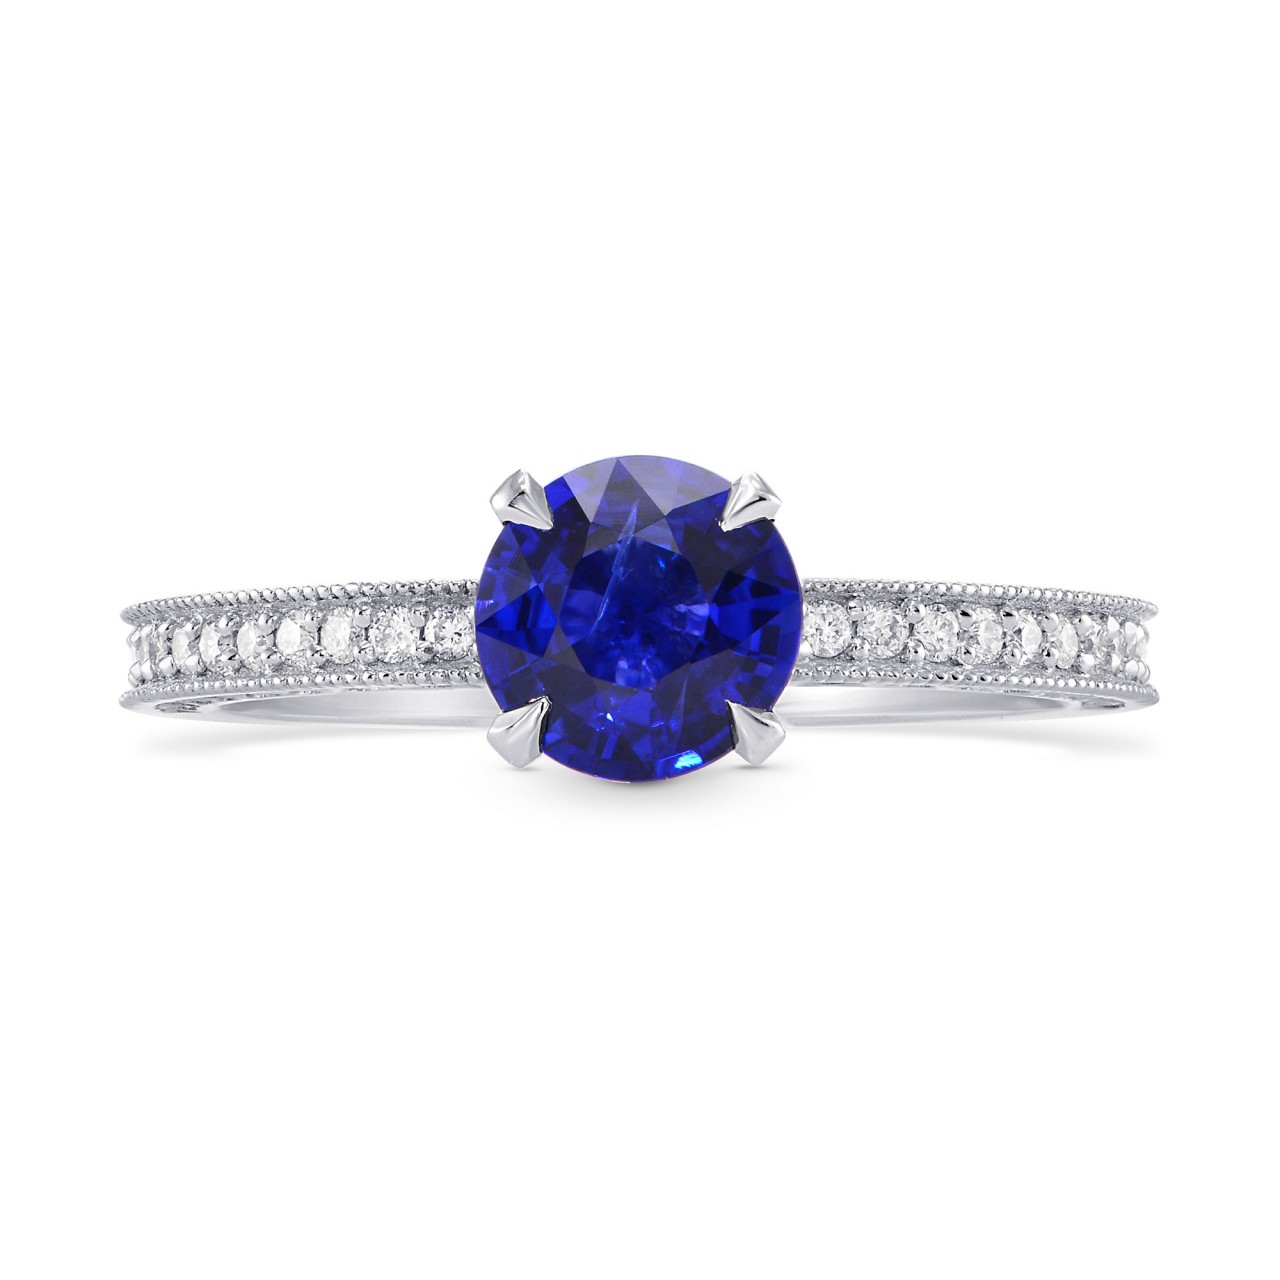 Round Sapphire & Diamond Ring with Milgrain, SKU 282360 (1.26Ct TW)